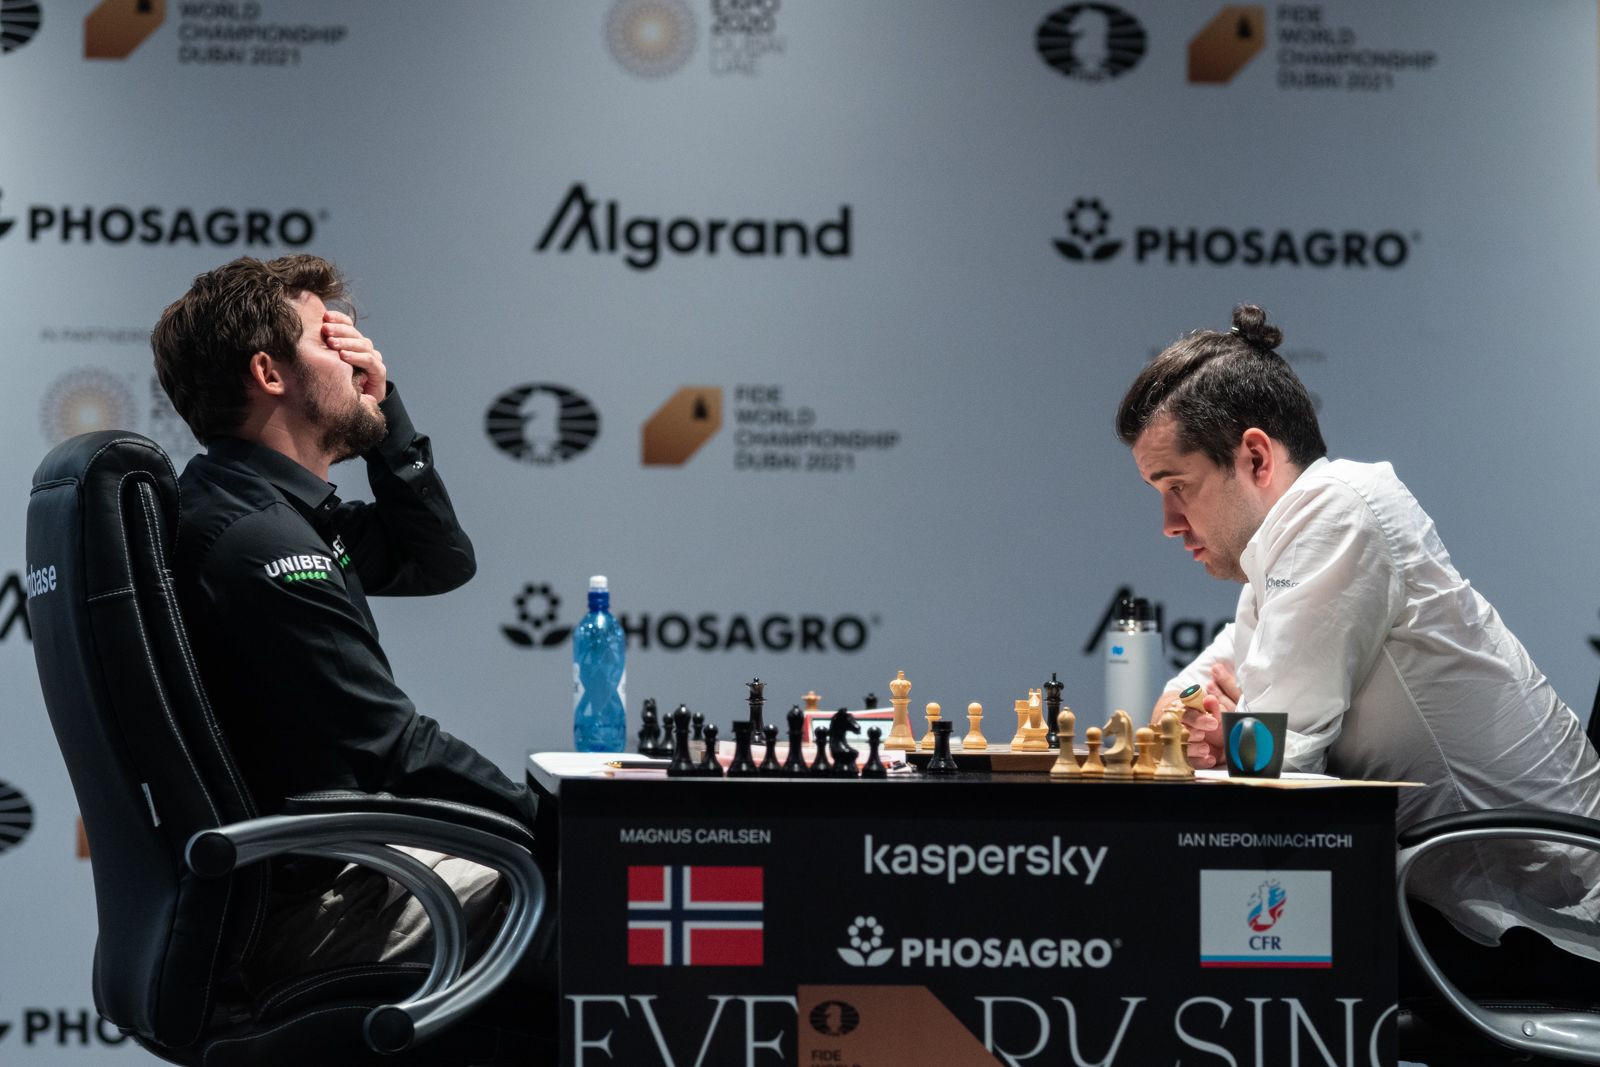 World Chess Championship: Ian Nepomniachtchi's glare, Magnus